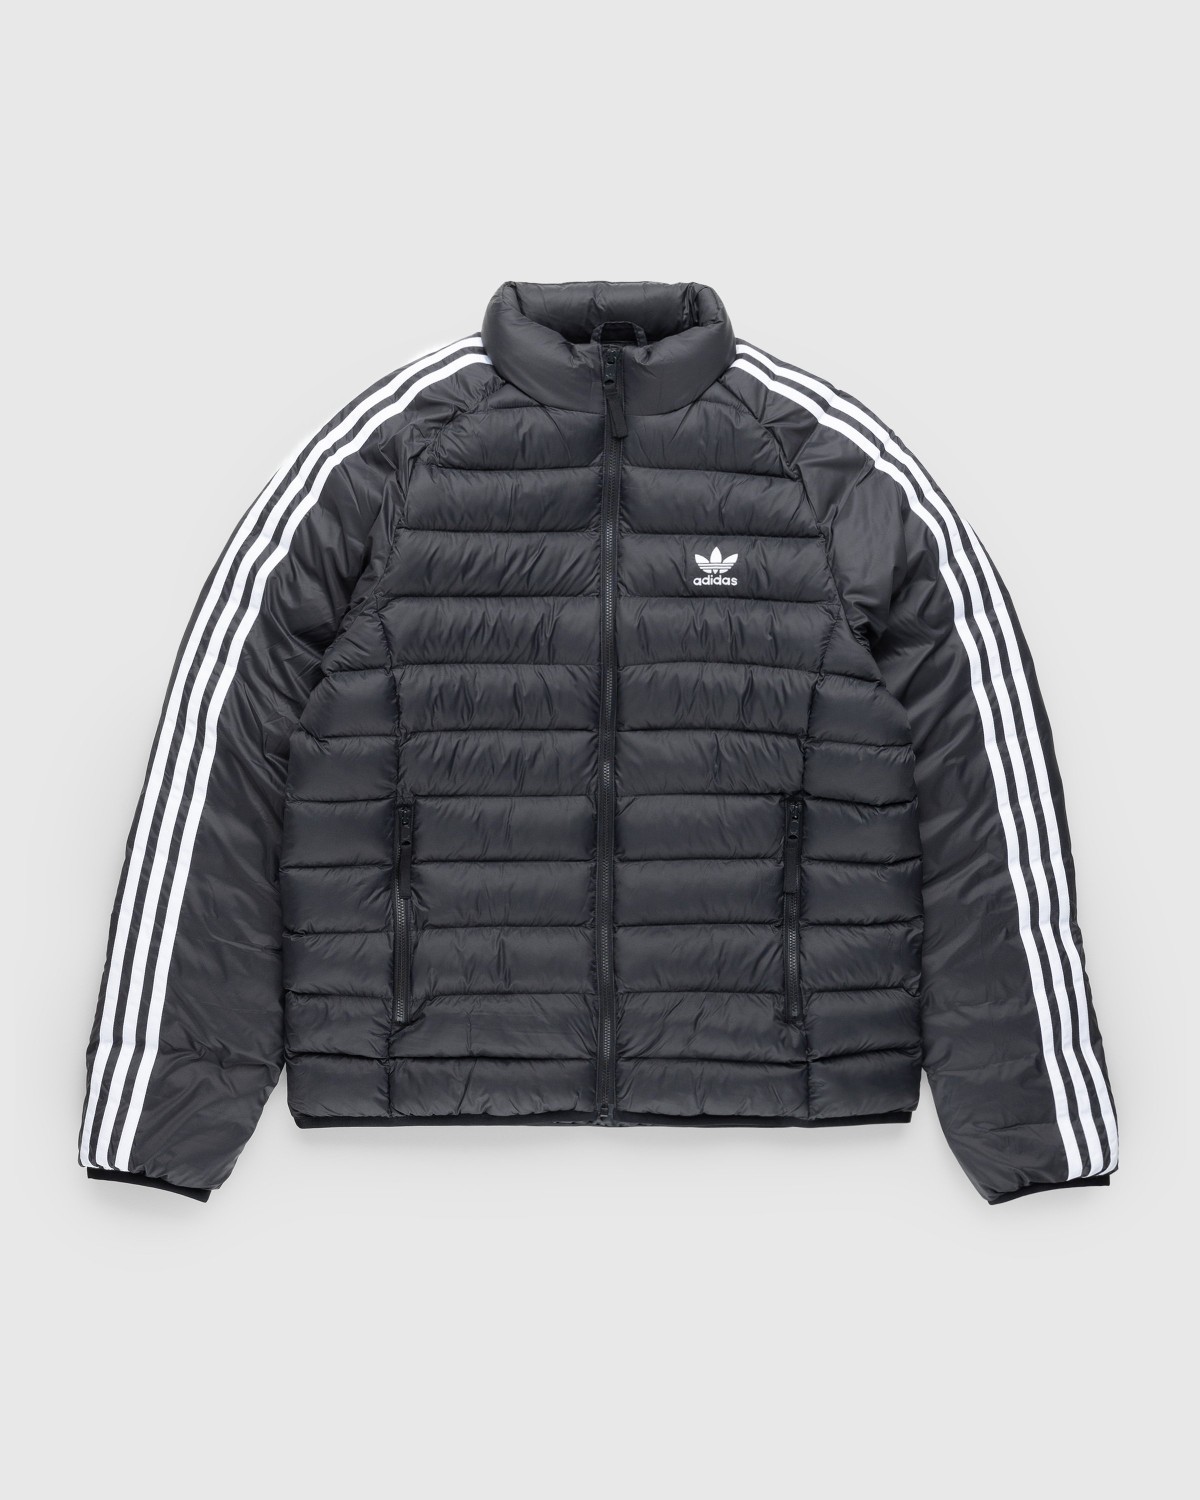 Adidas – Padded Jacket Black | Highsnobiety Shop